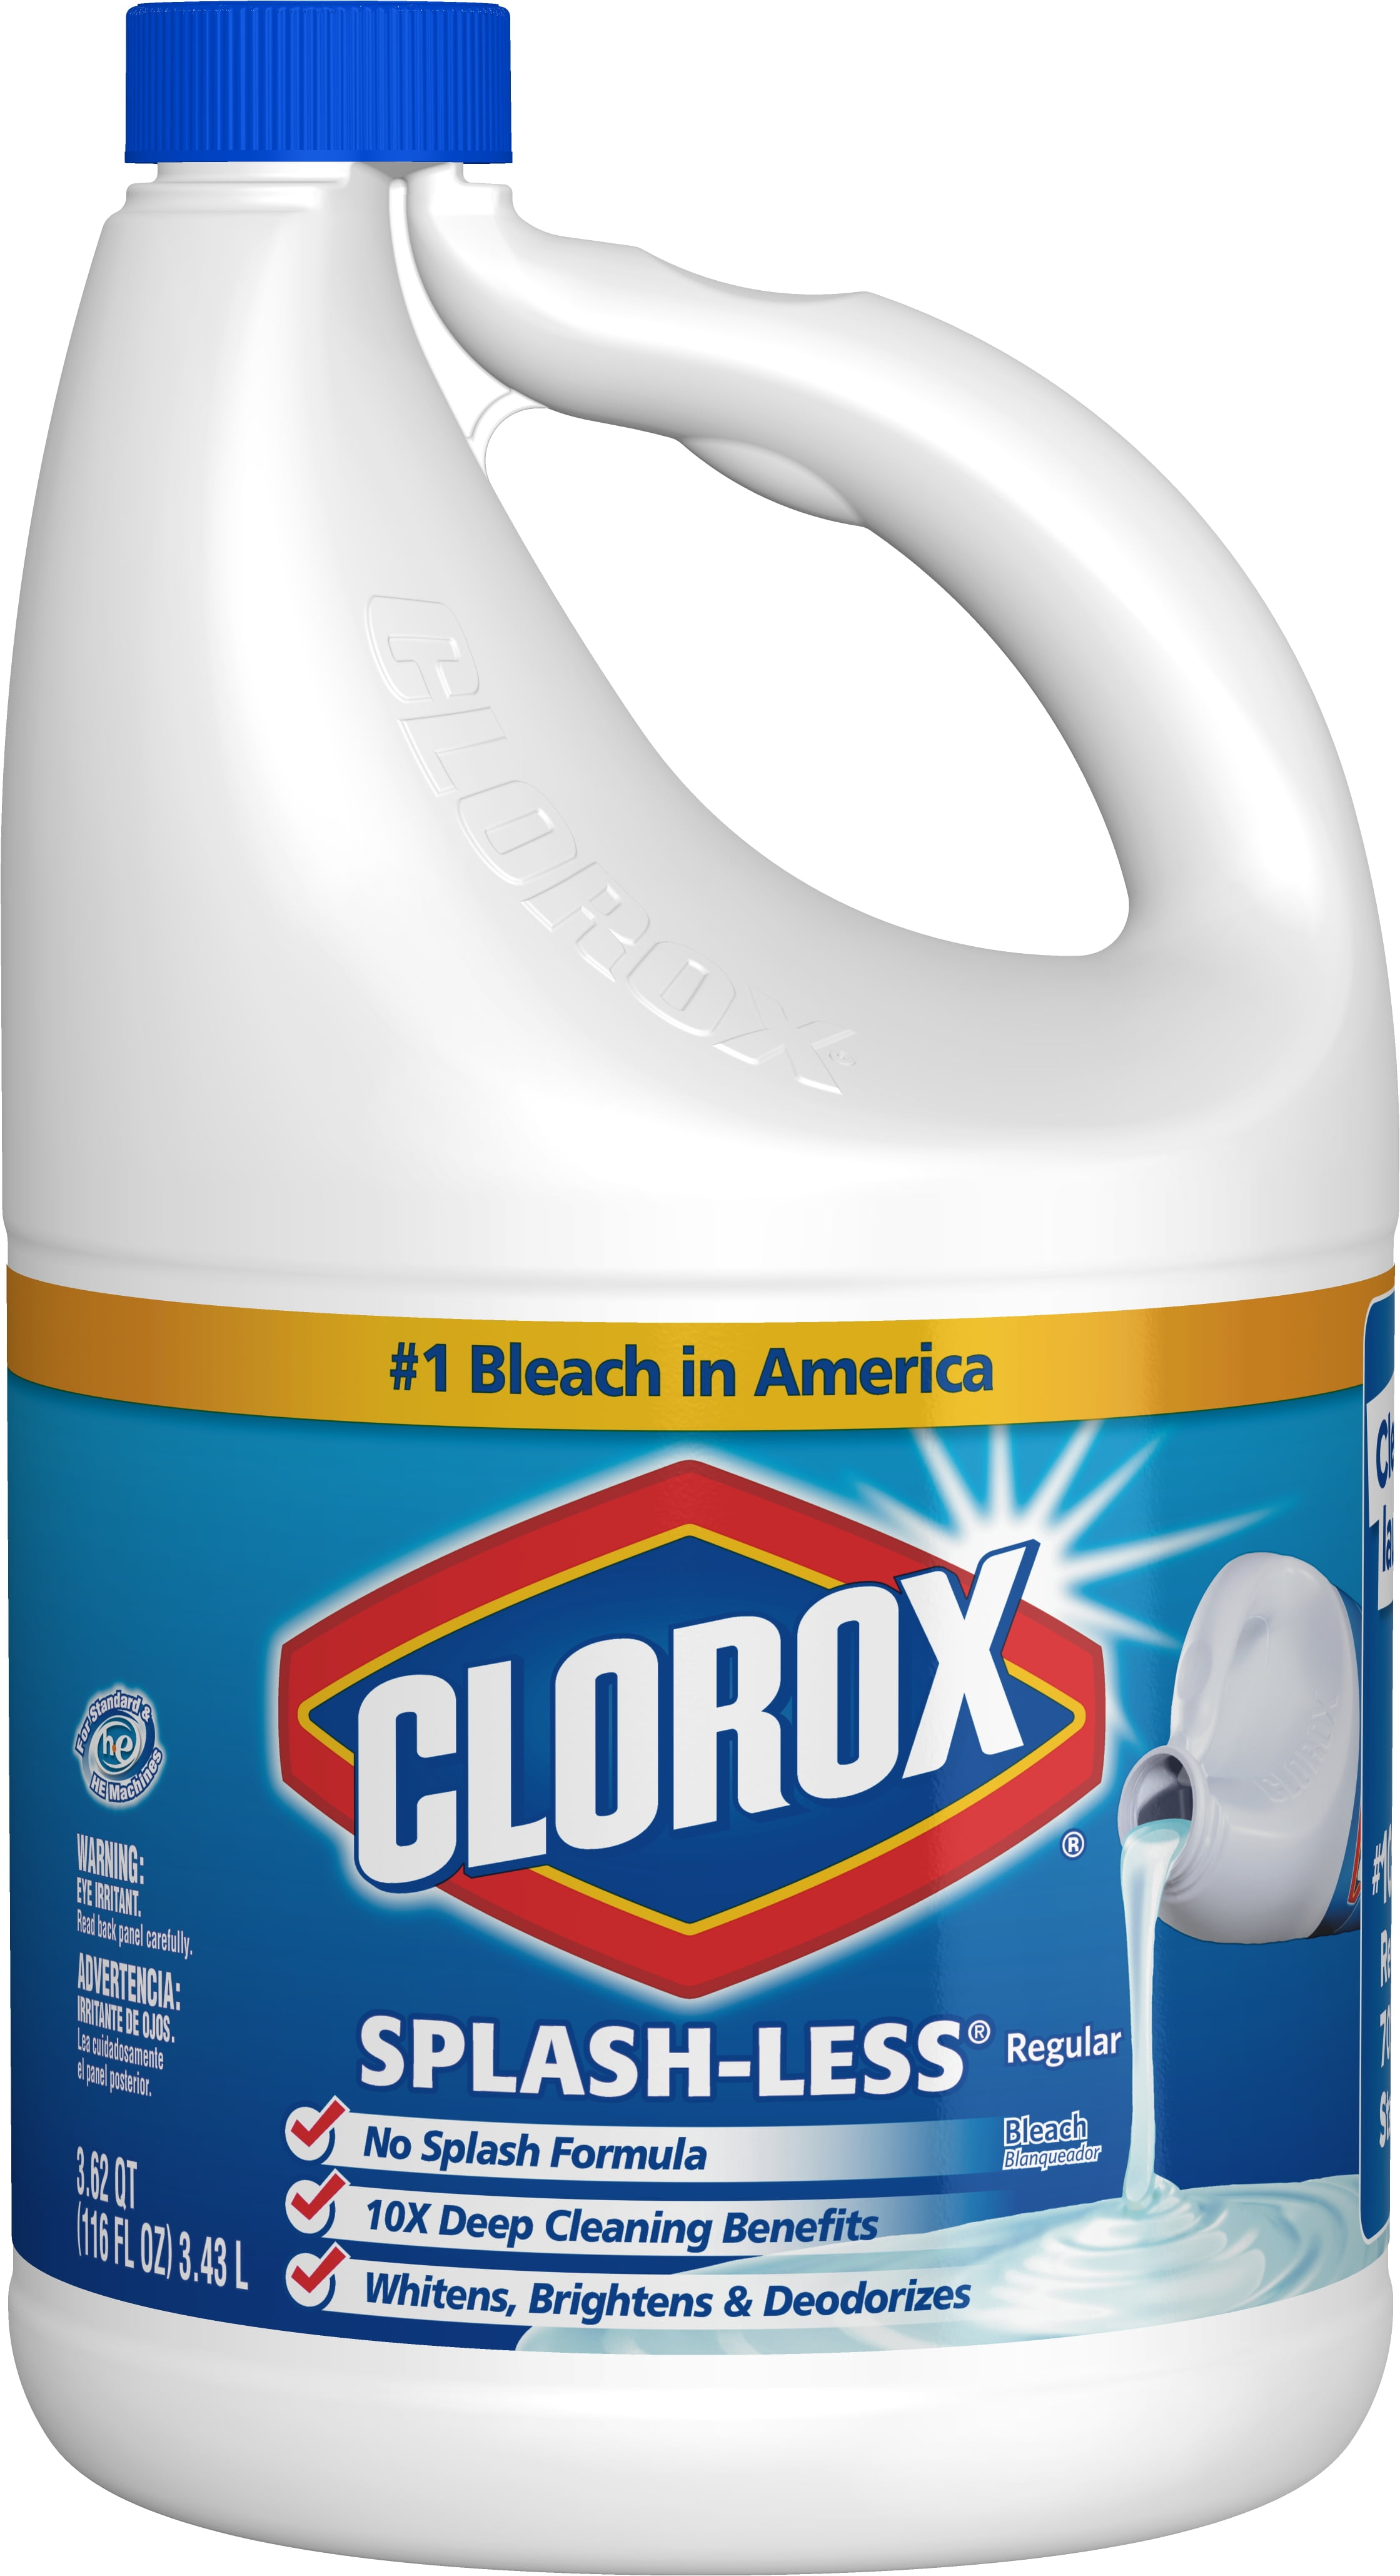 White Wall Cleaner vs Clorox Bleach 